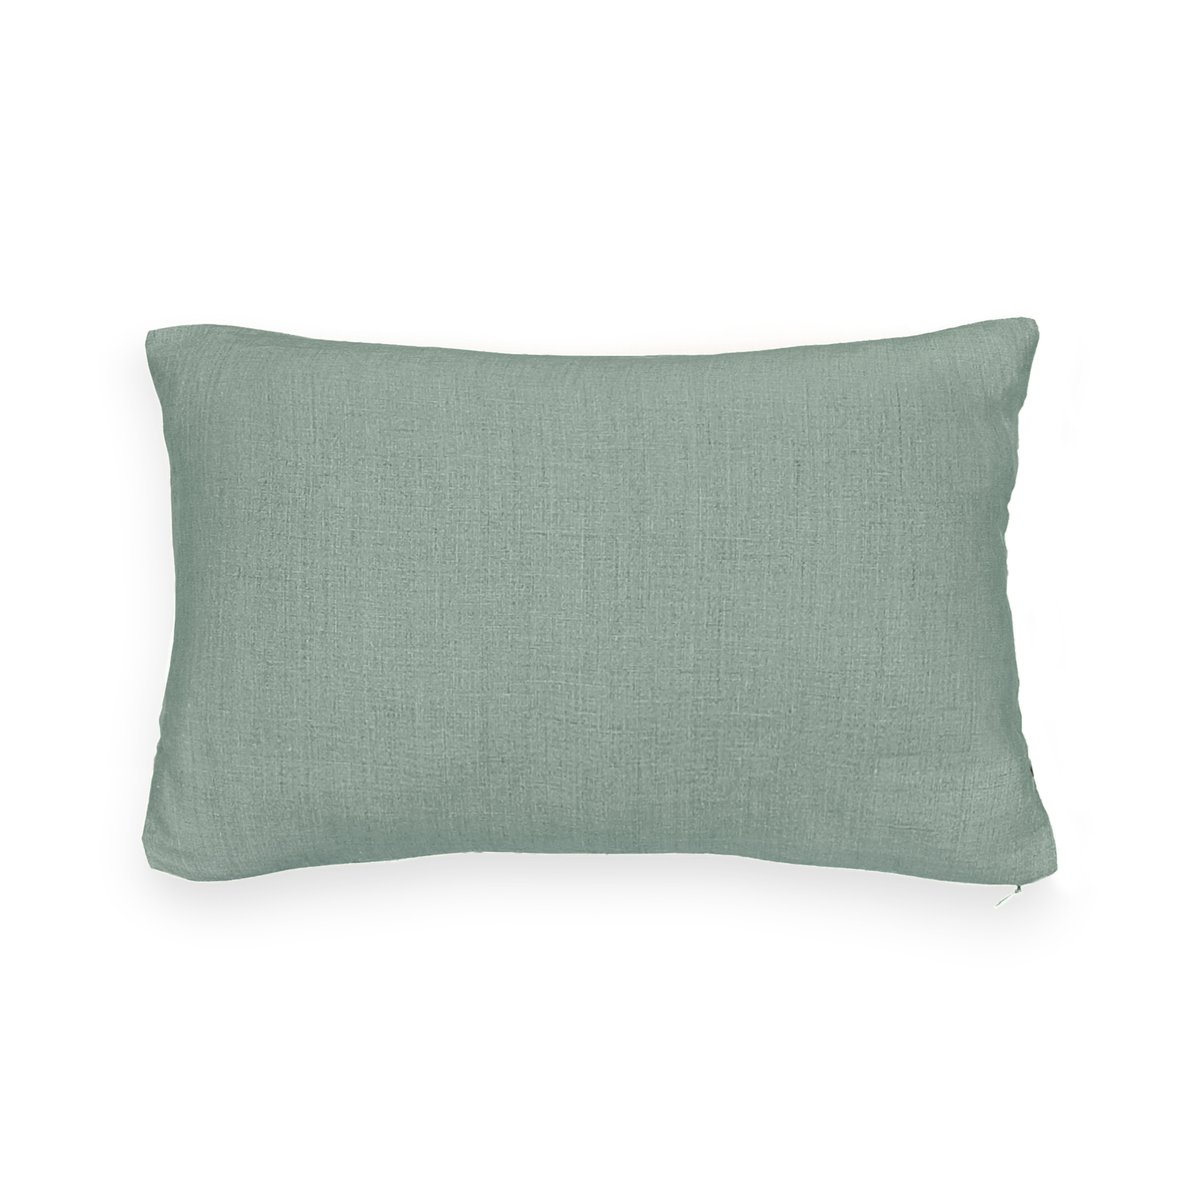 Чехол LaRedoute Для подушки из стираного льна Onega 40 x 40 см зеленый, размер 40 x 40 см - фото 2